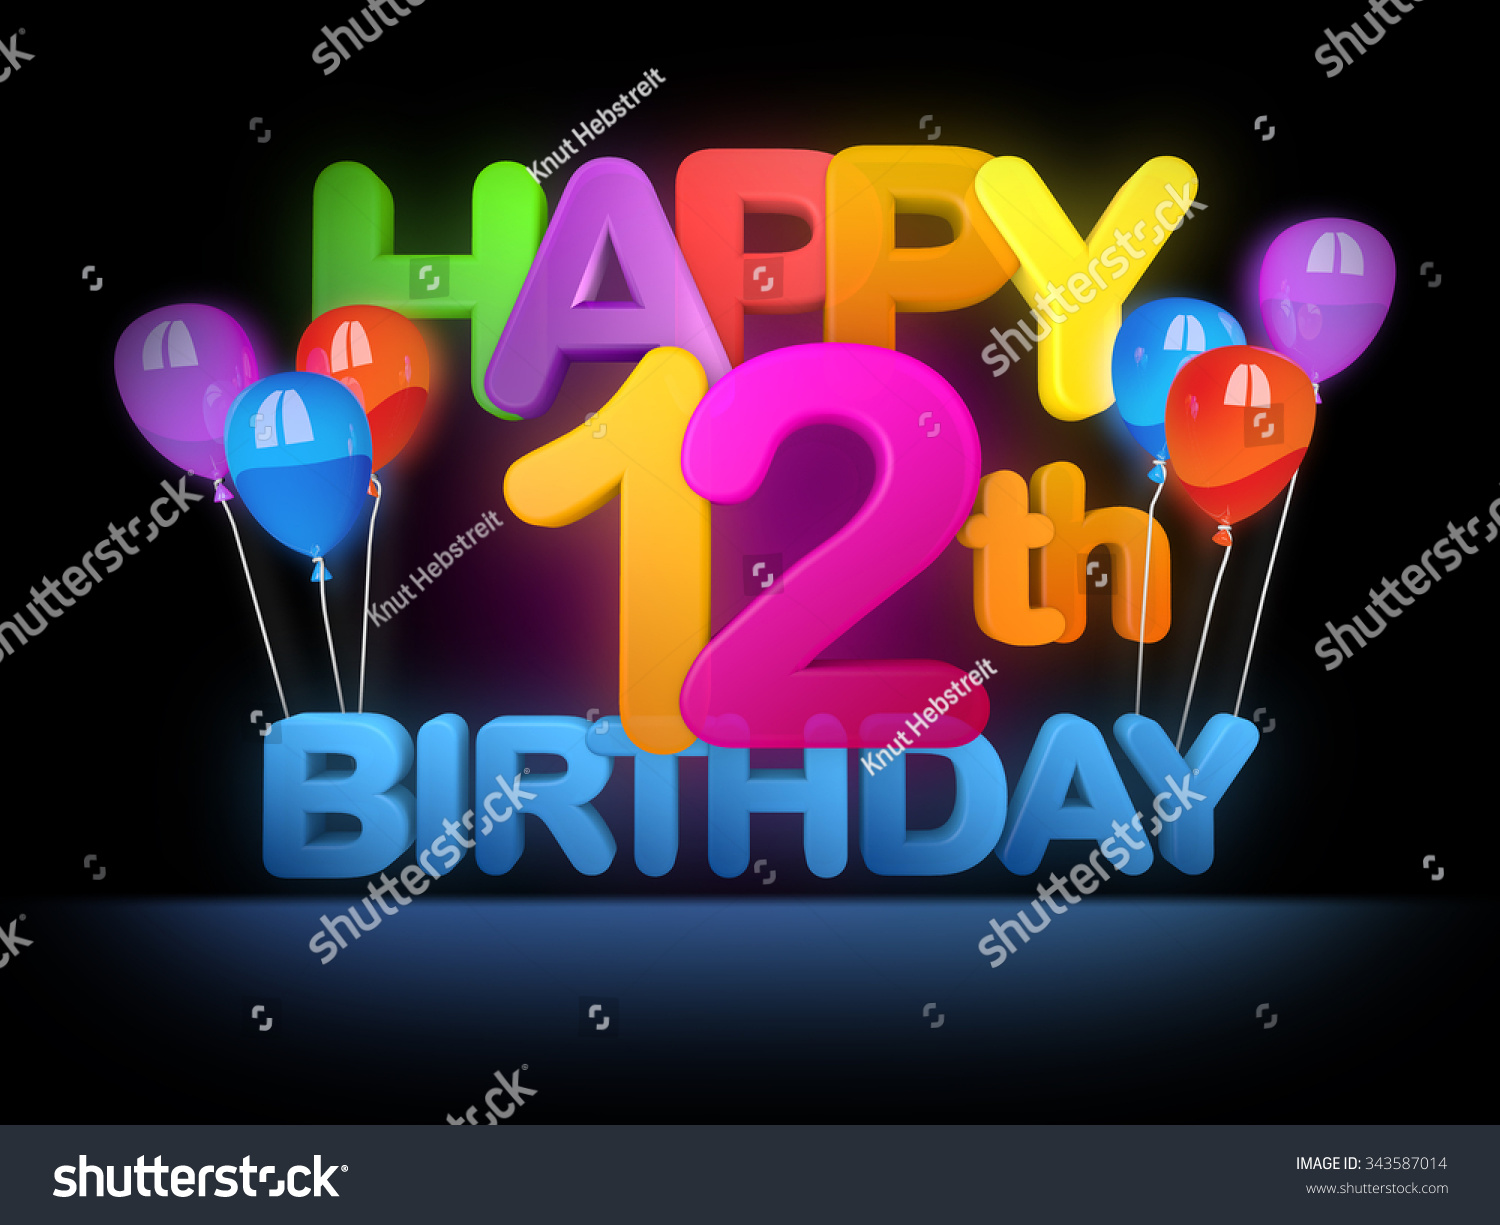 Happy 12th Birthday Title Dark Stock Photo 343587014 : Shutterstock